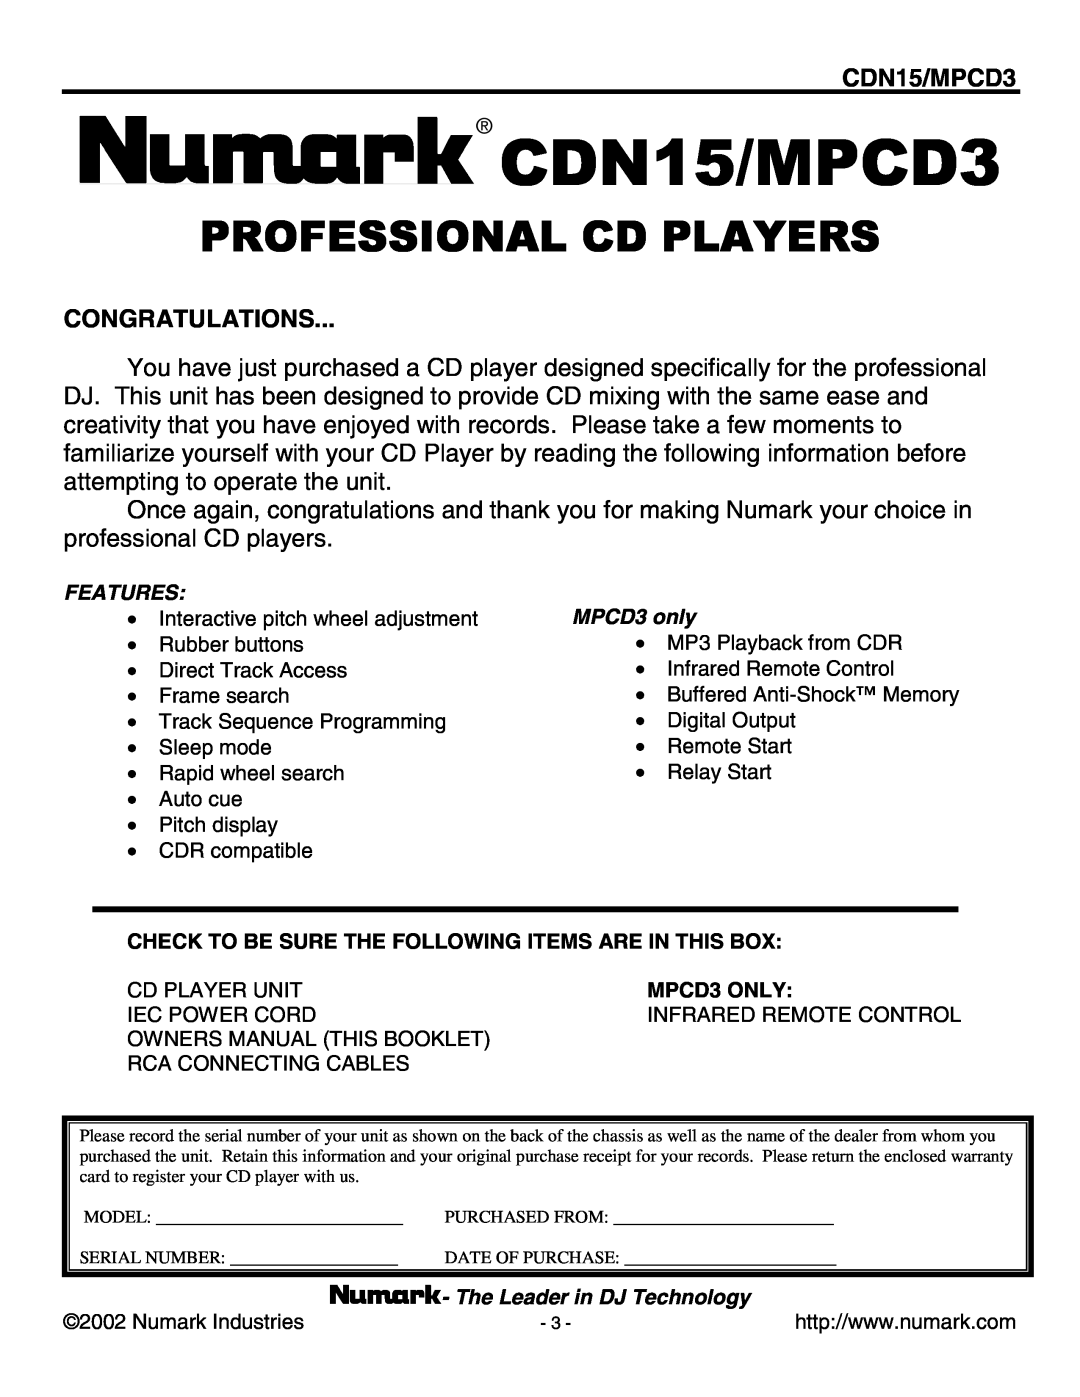 Numark Industries user manual CDN15/MPCD3, Professional Cd Players 